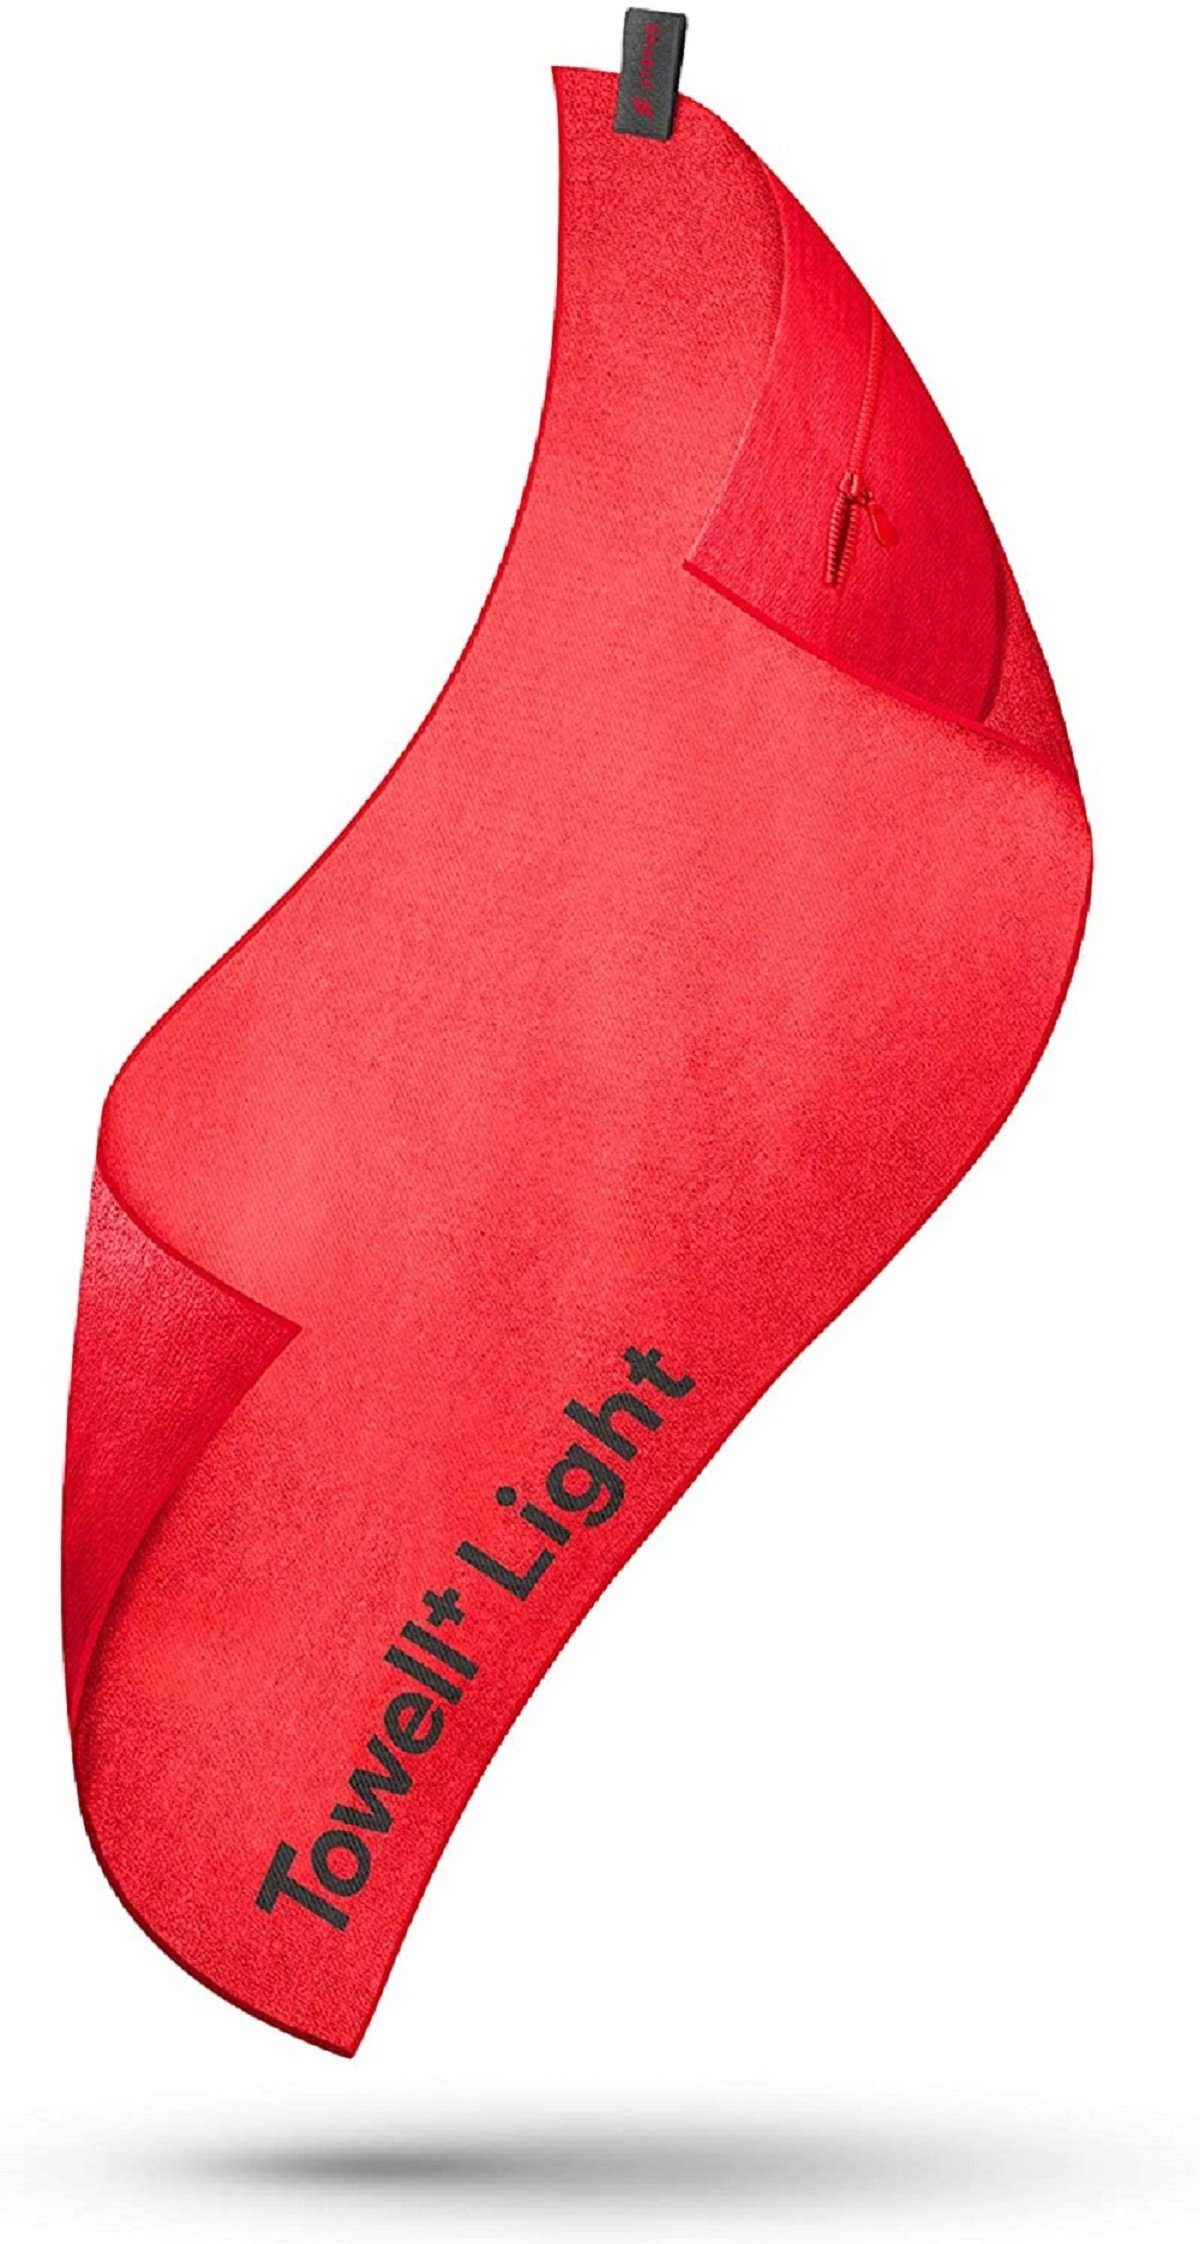 Stryve Sporthandtuch TOWELL+Light Sporthandtuch aus Red, Microfaser,Power Baumwolle